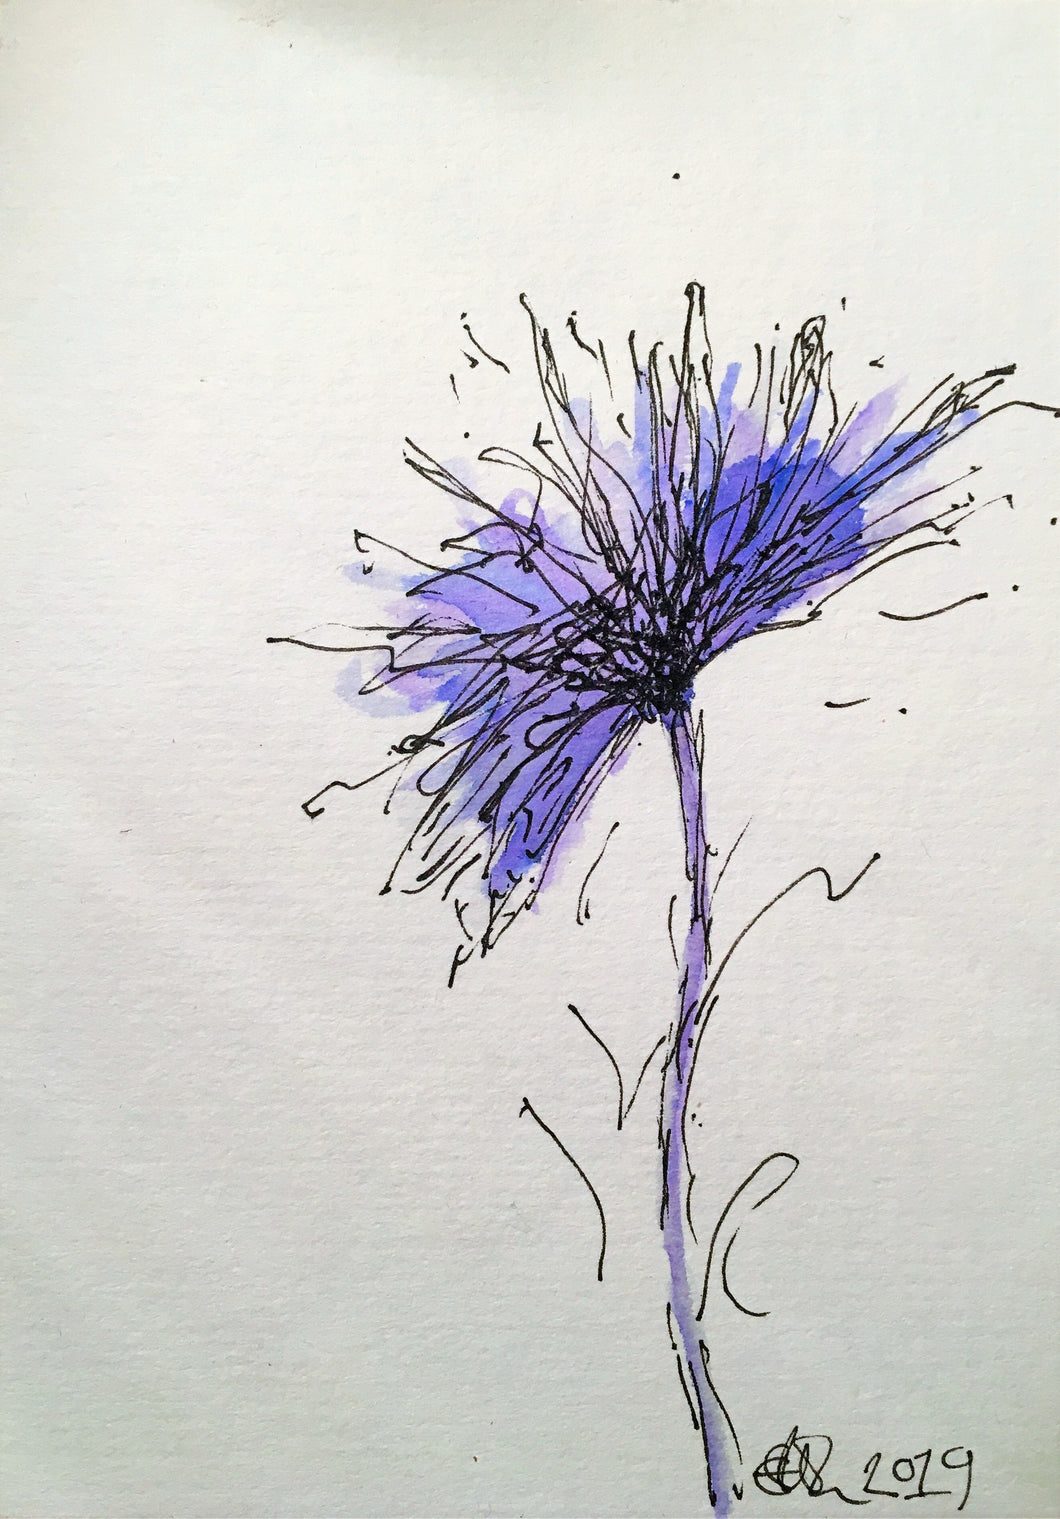 Handpainted Watercolour Greeting Card - Abstract Blue/Purple Spikey Flower Design - eDgE dEsiGn London